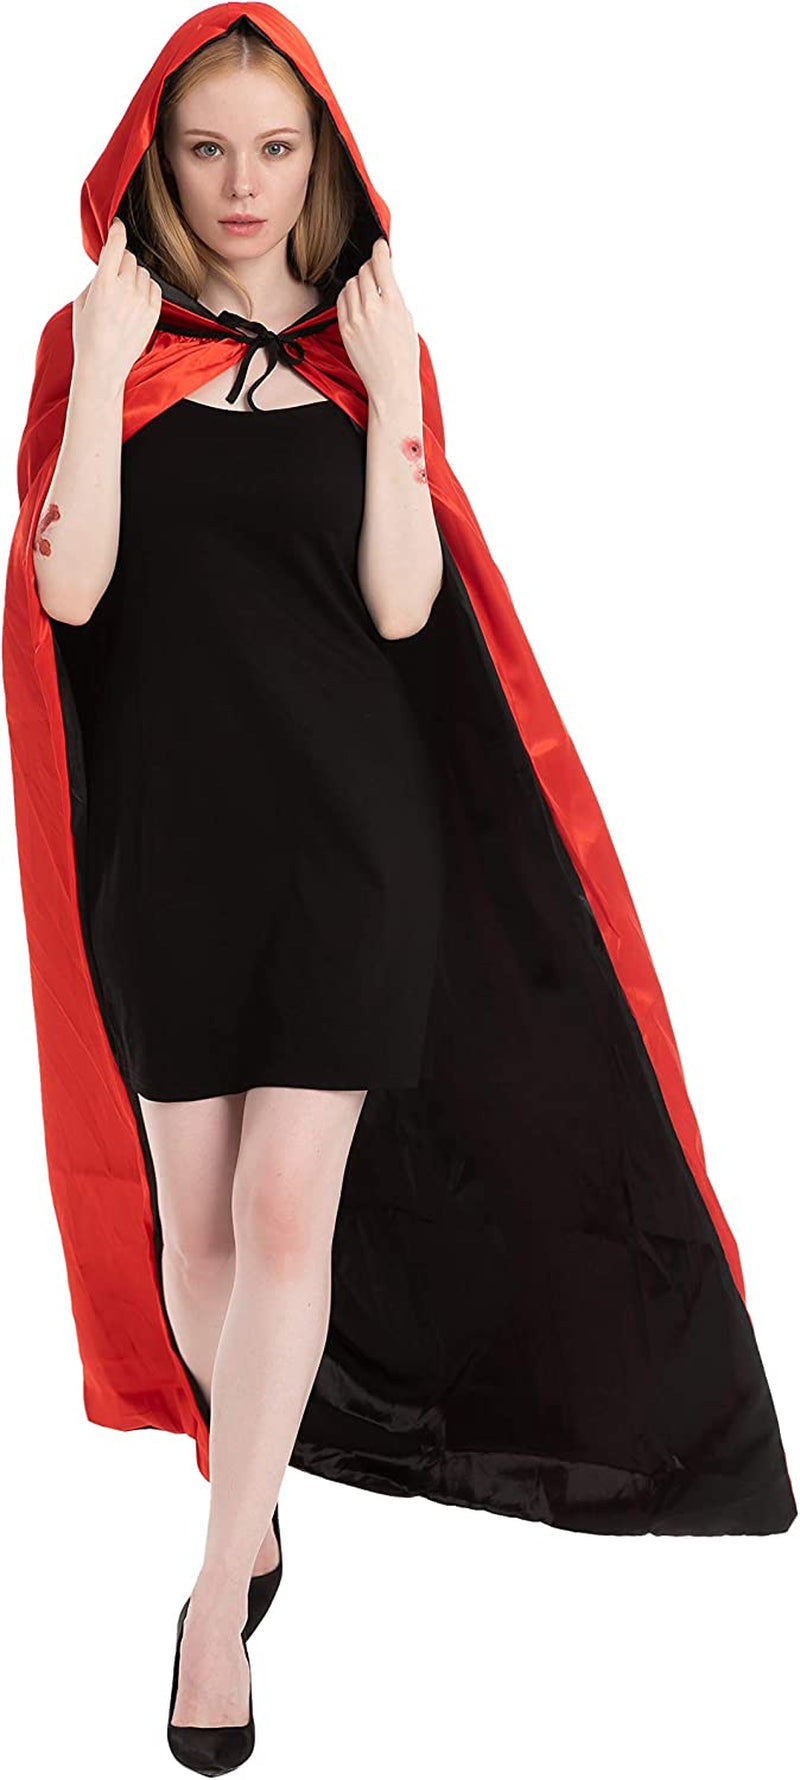 JOYIN Adult Unisex Vampire Costume Set with Reversible Hooded Cape Cloak and Tattoo Scar for Halloween Costume Party, Dracula Theme Party and Transylvania Costume  Joyin Inc.   